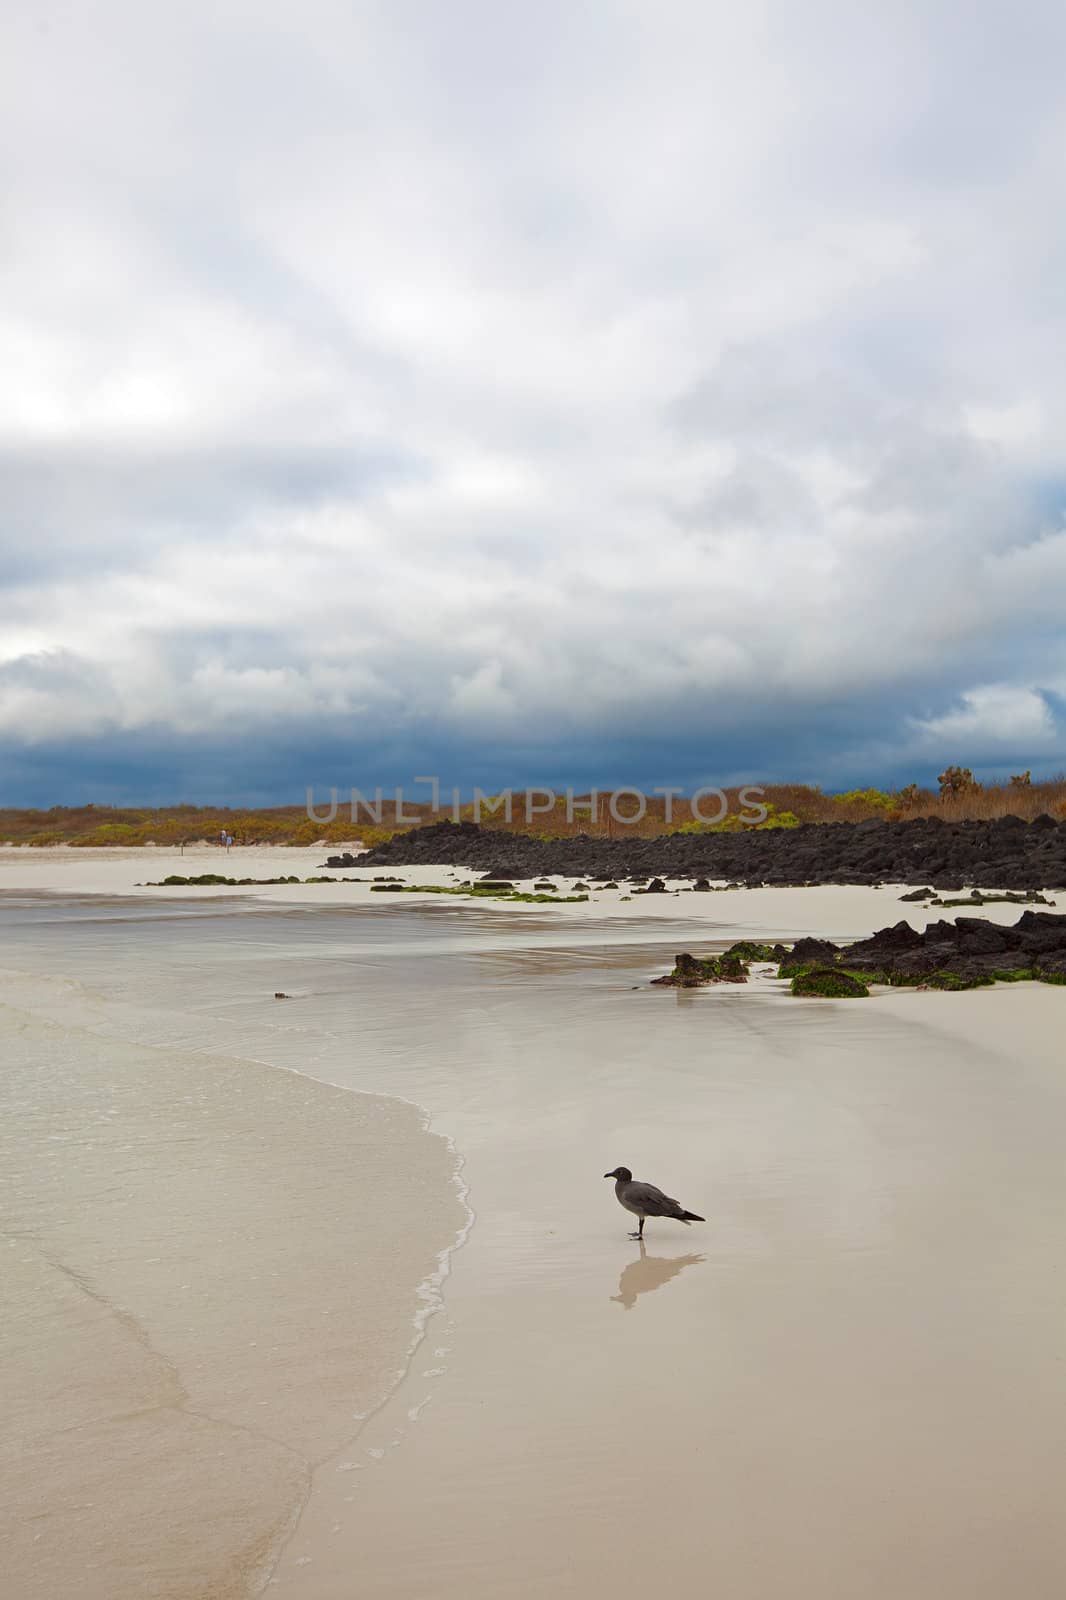 Mockingbird on Tortuga bay by kjorgen